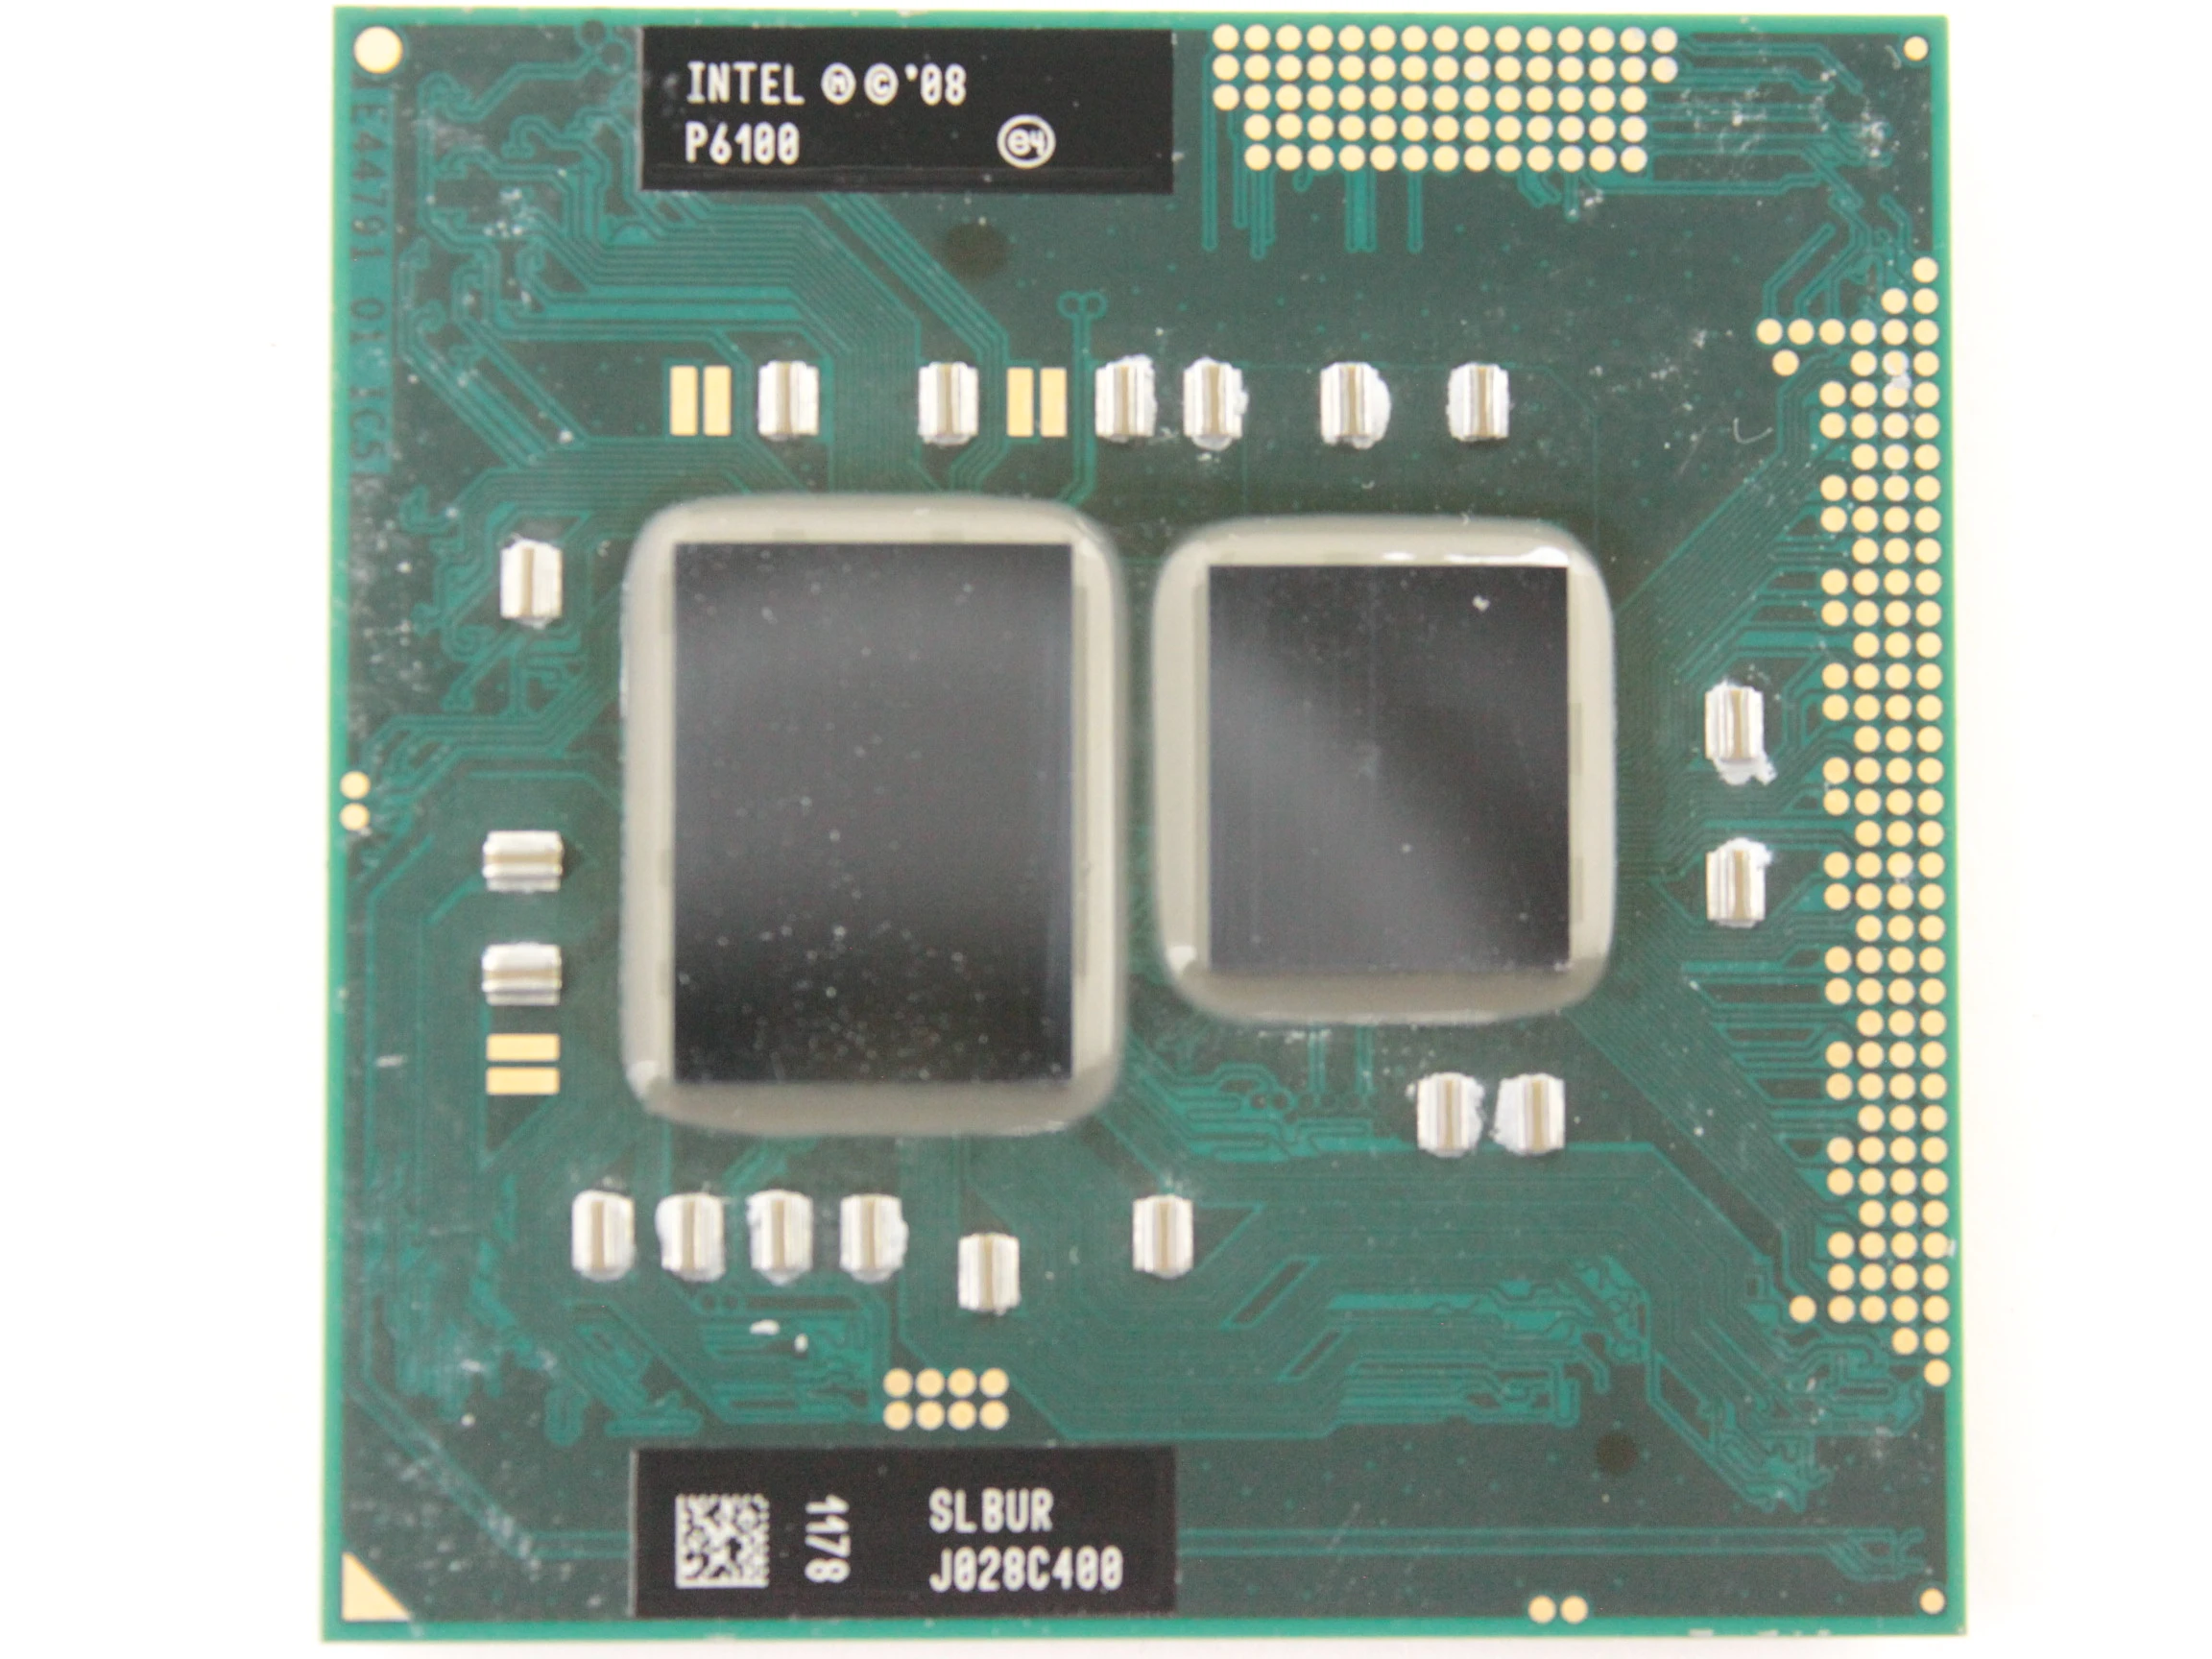 Sandalen ontsnapping uit de gevangenis Modderig Processor For Laptop Intel Pentium P6100 (3m Cache, 2 Ghz) [slbur] - Cpus -  AliExpress